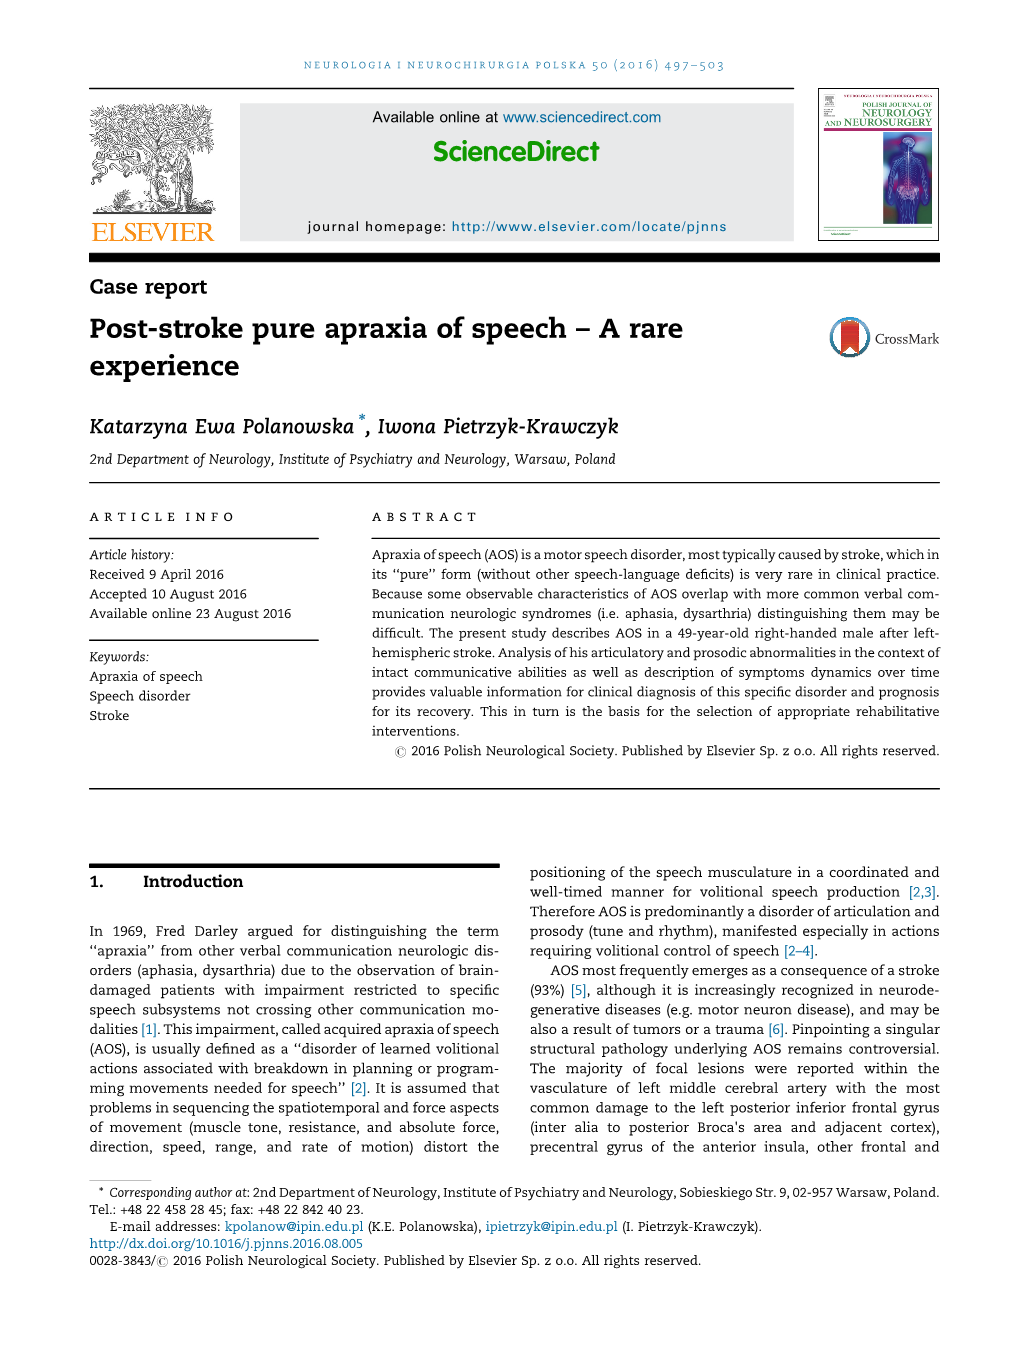 Post-Stroke Pure Apraxia of Speech – a Rare